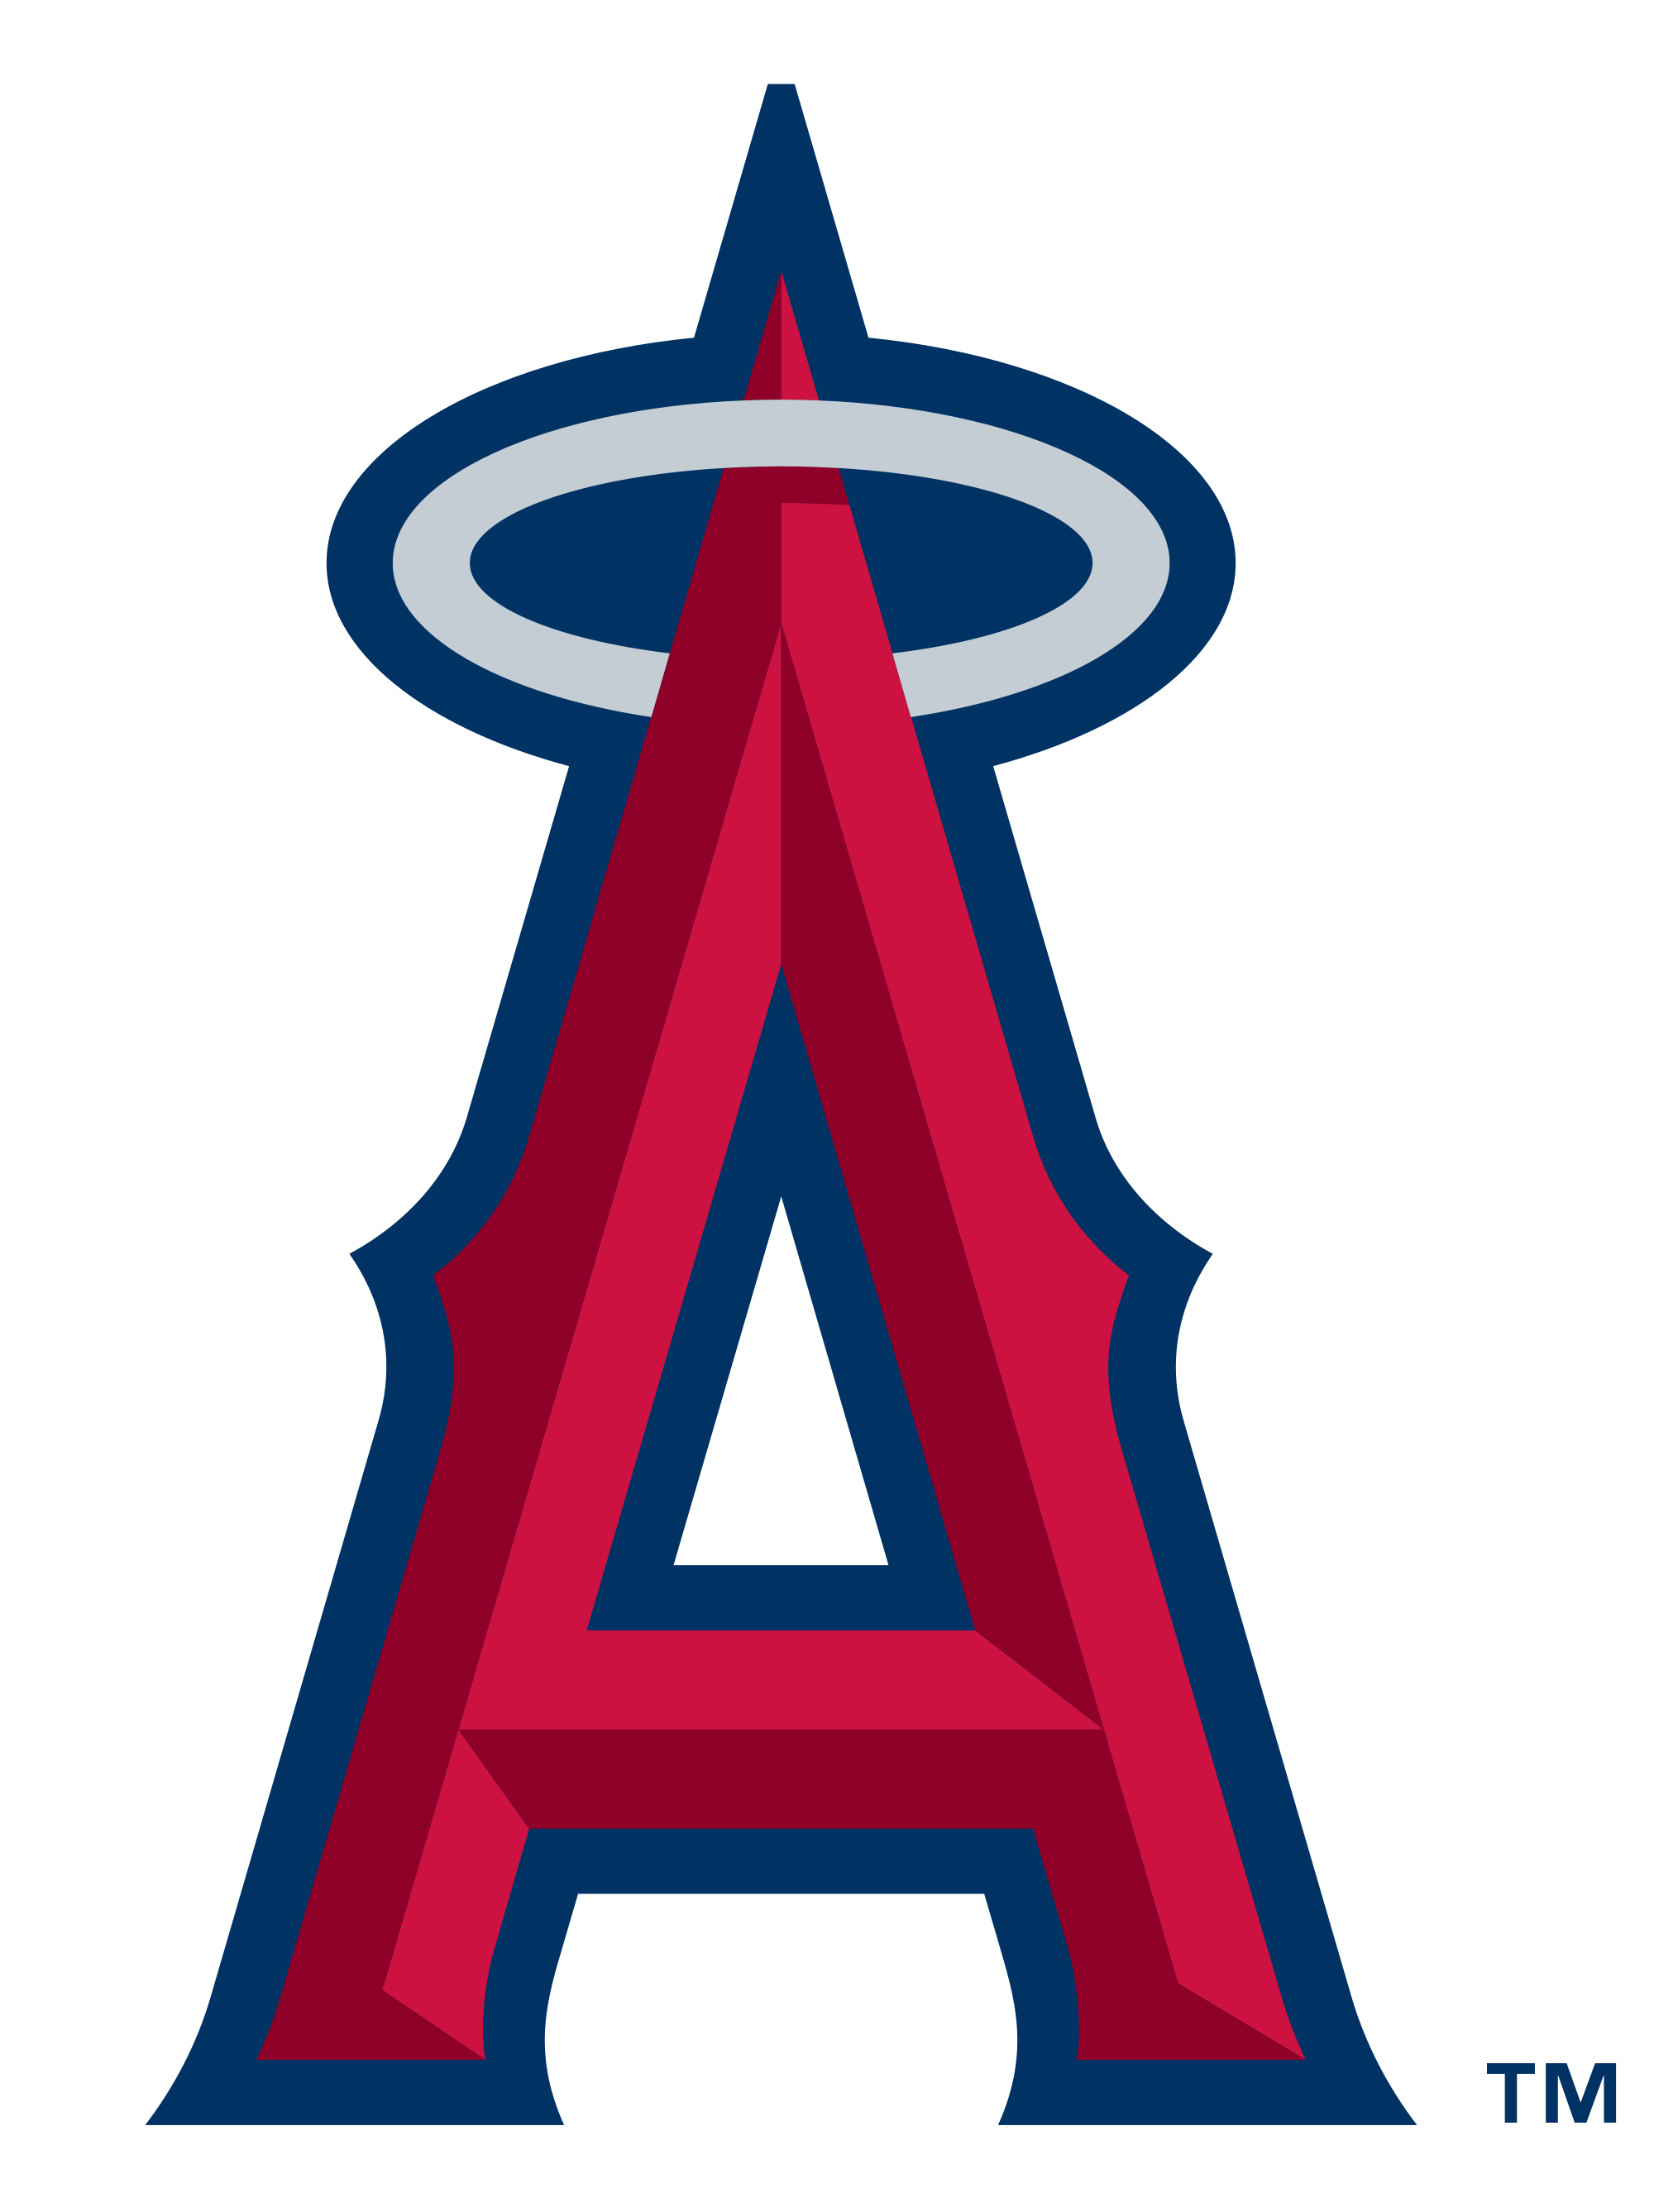 Wallpaper wallpaper, sport, logo, baseball, Los Angeles Angels images for  desktop, section спорт - download